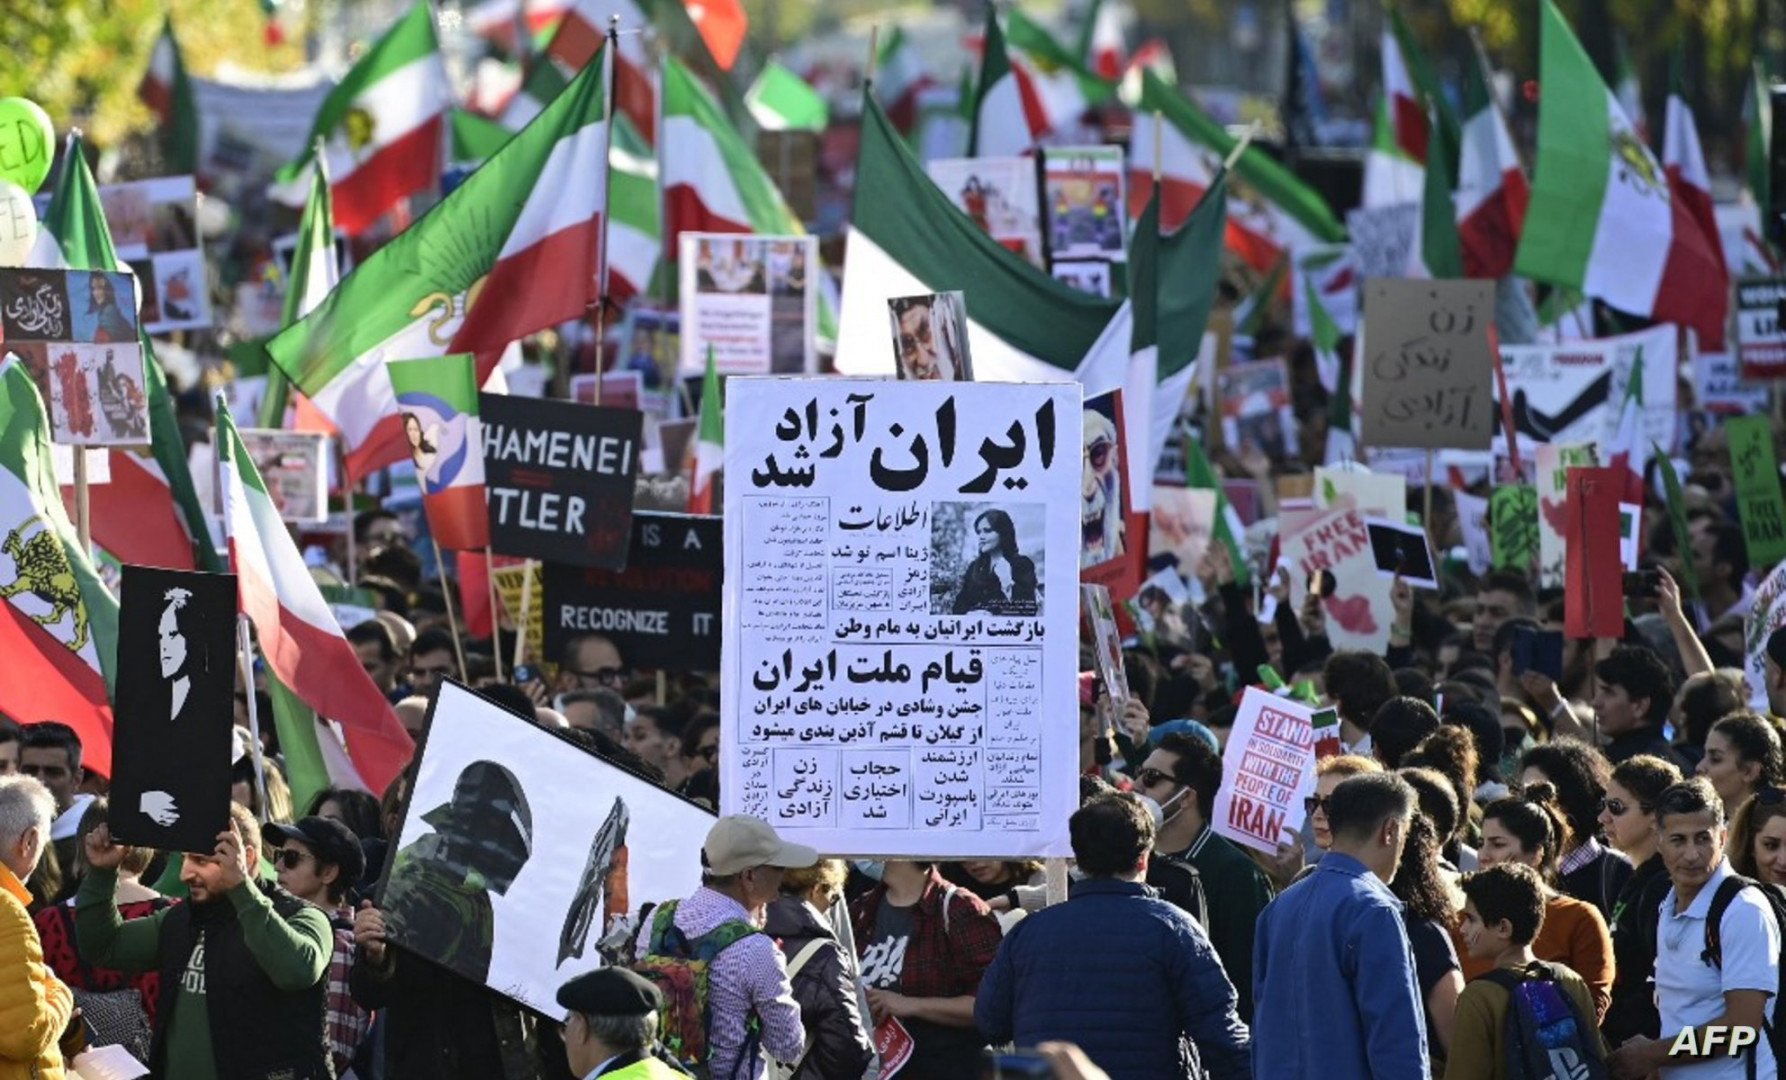 Iran hijab protest in Berlin draws thousands